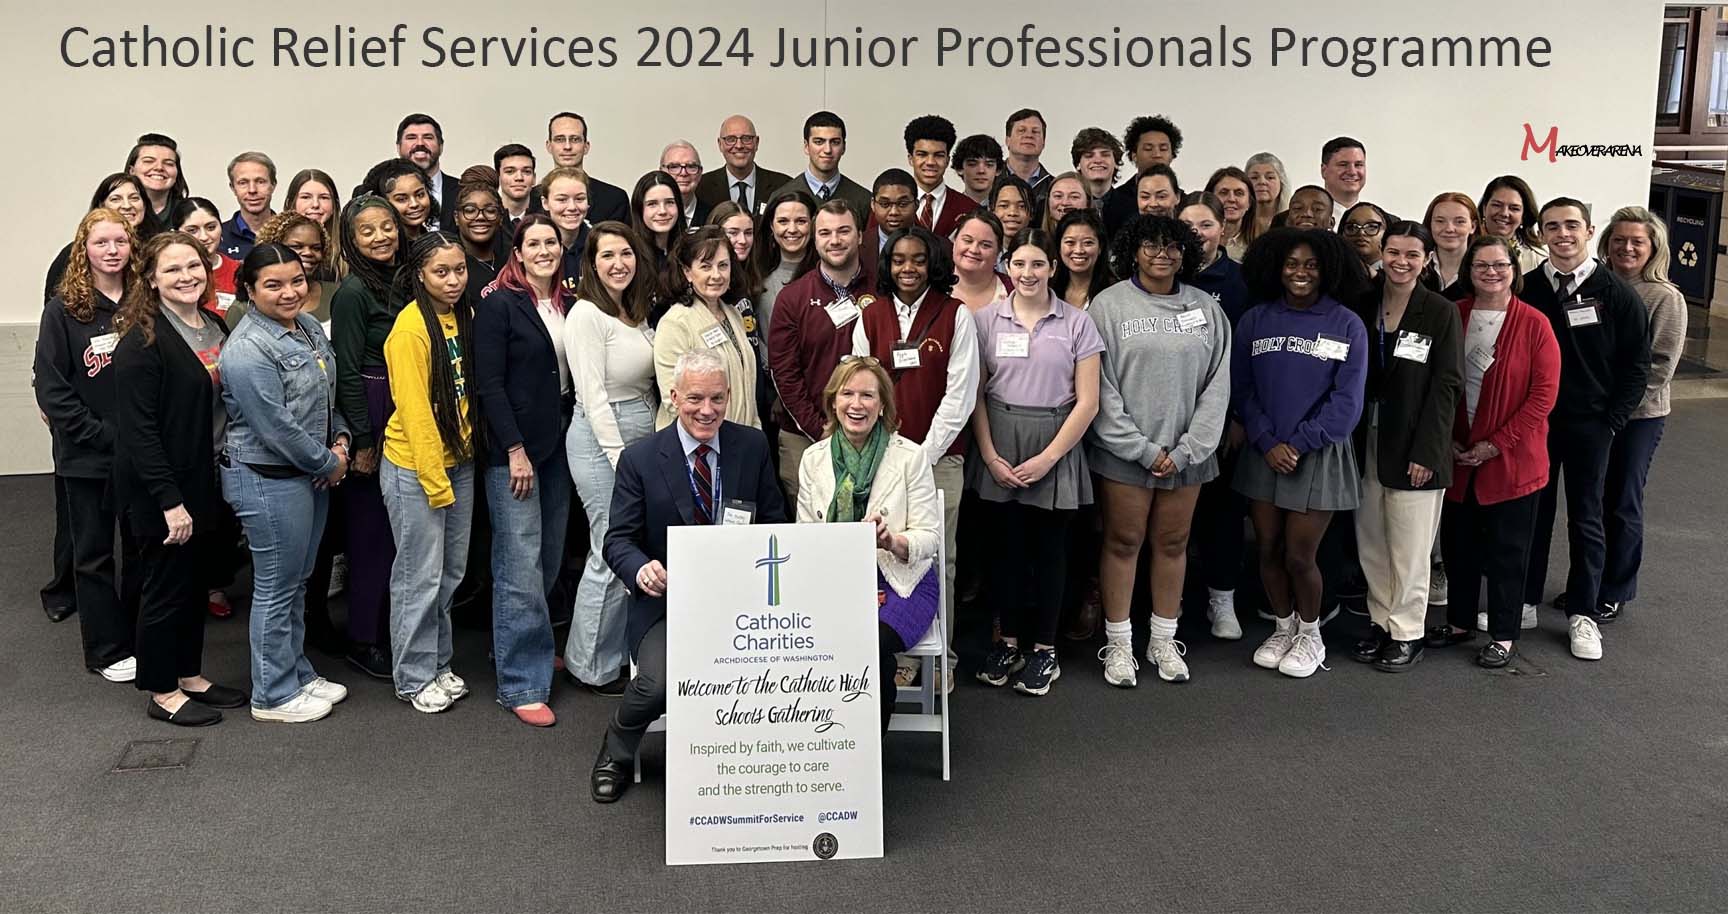 Catholic Relief Services 2024 Junior Professionals Programme